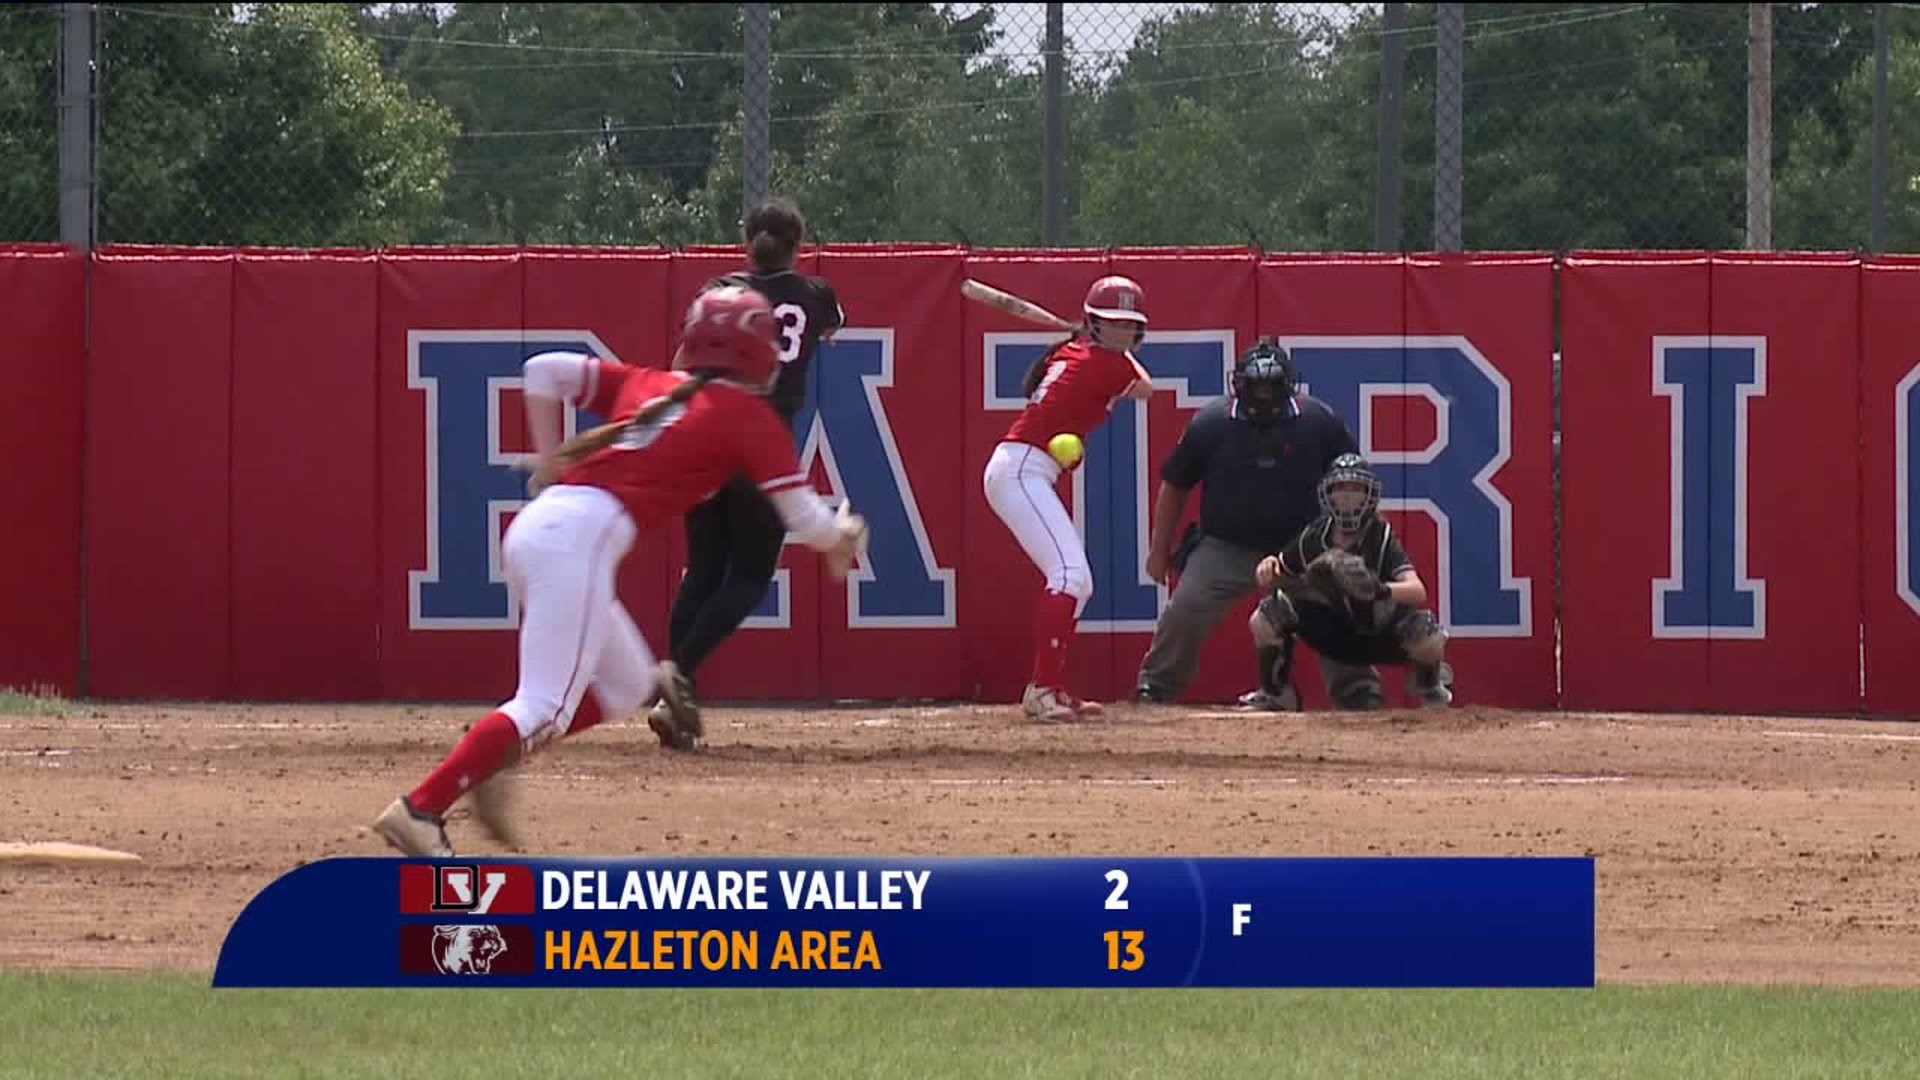 Hazleton Area vs Delaware Valley softball